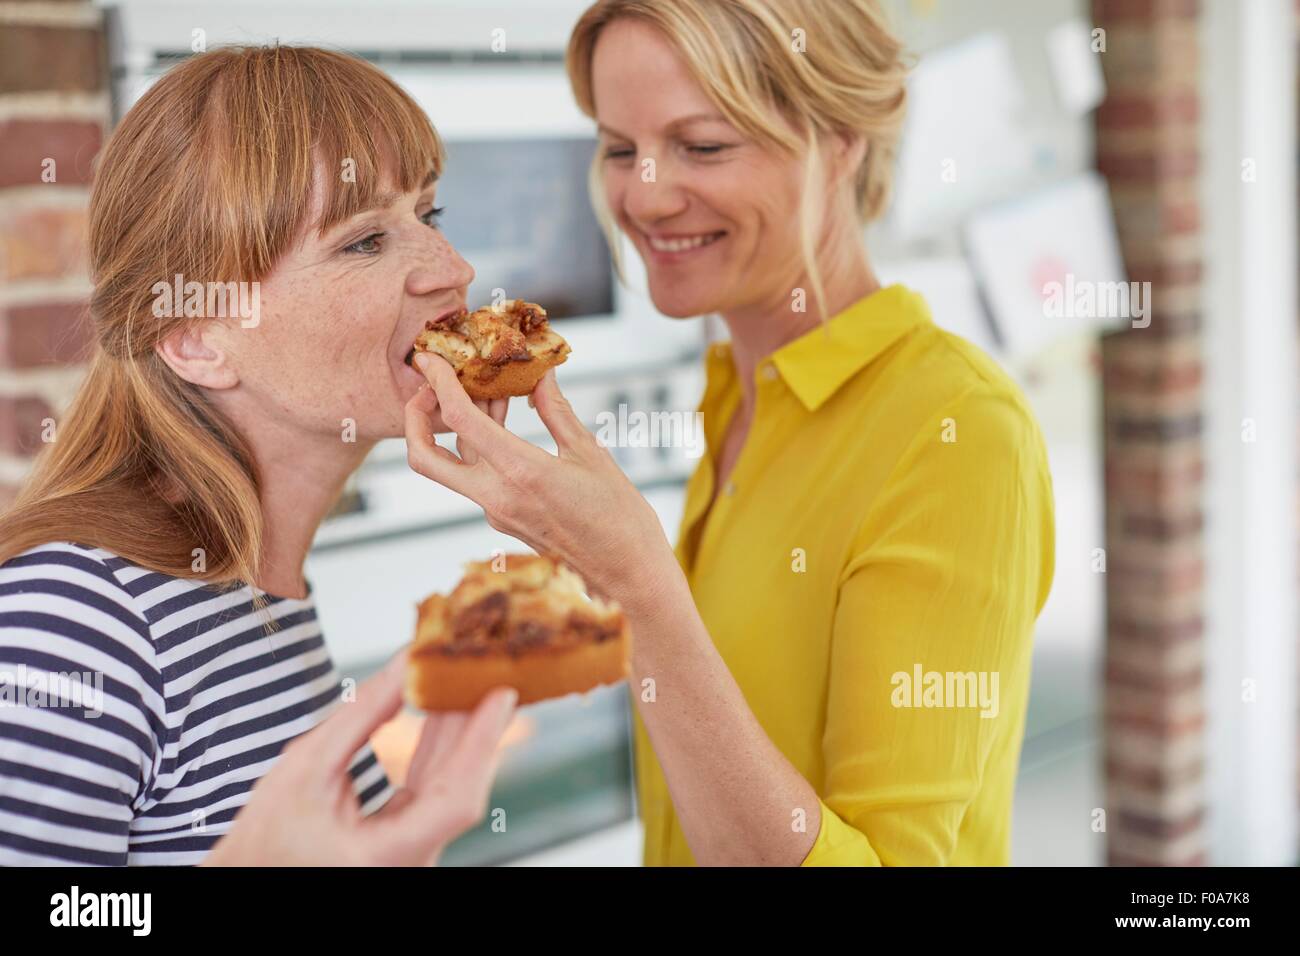 Women eating cake in kitchen Stock Photo